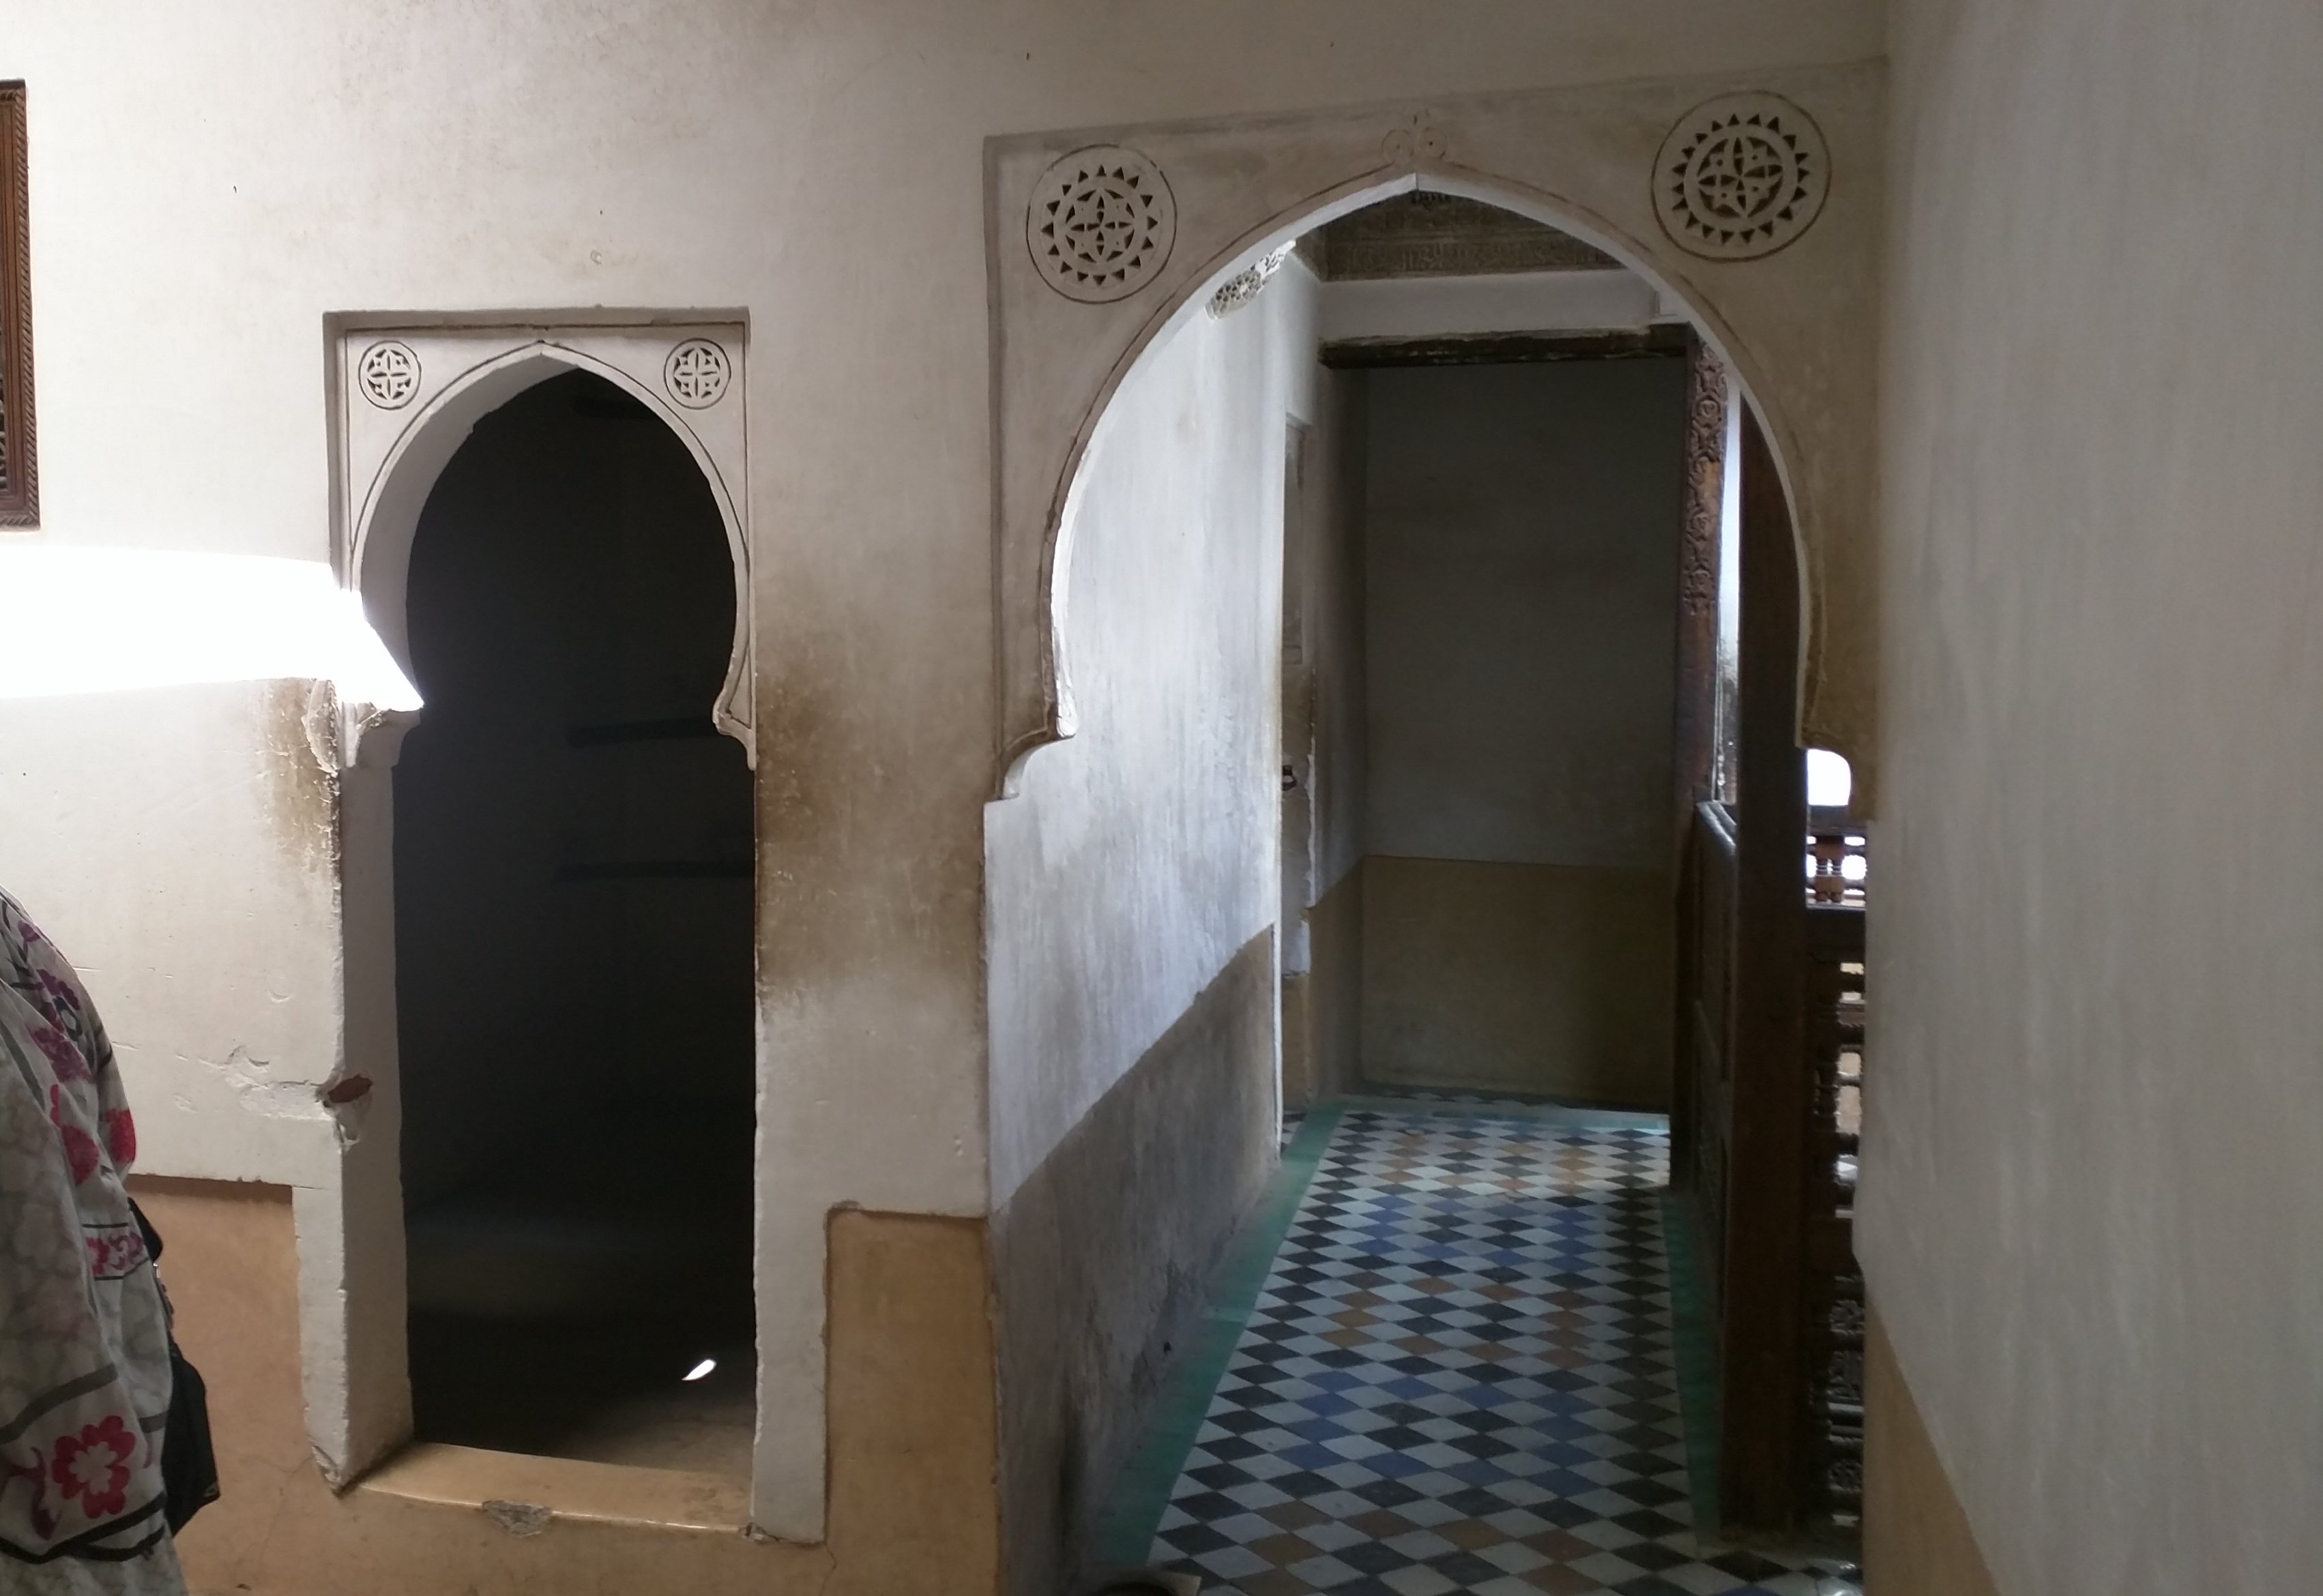 Inside Madrassah Ben Youssef.